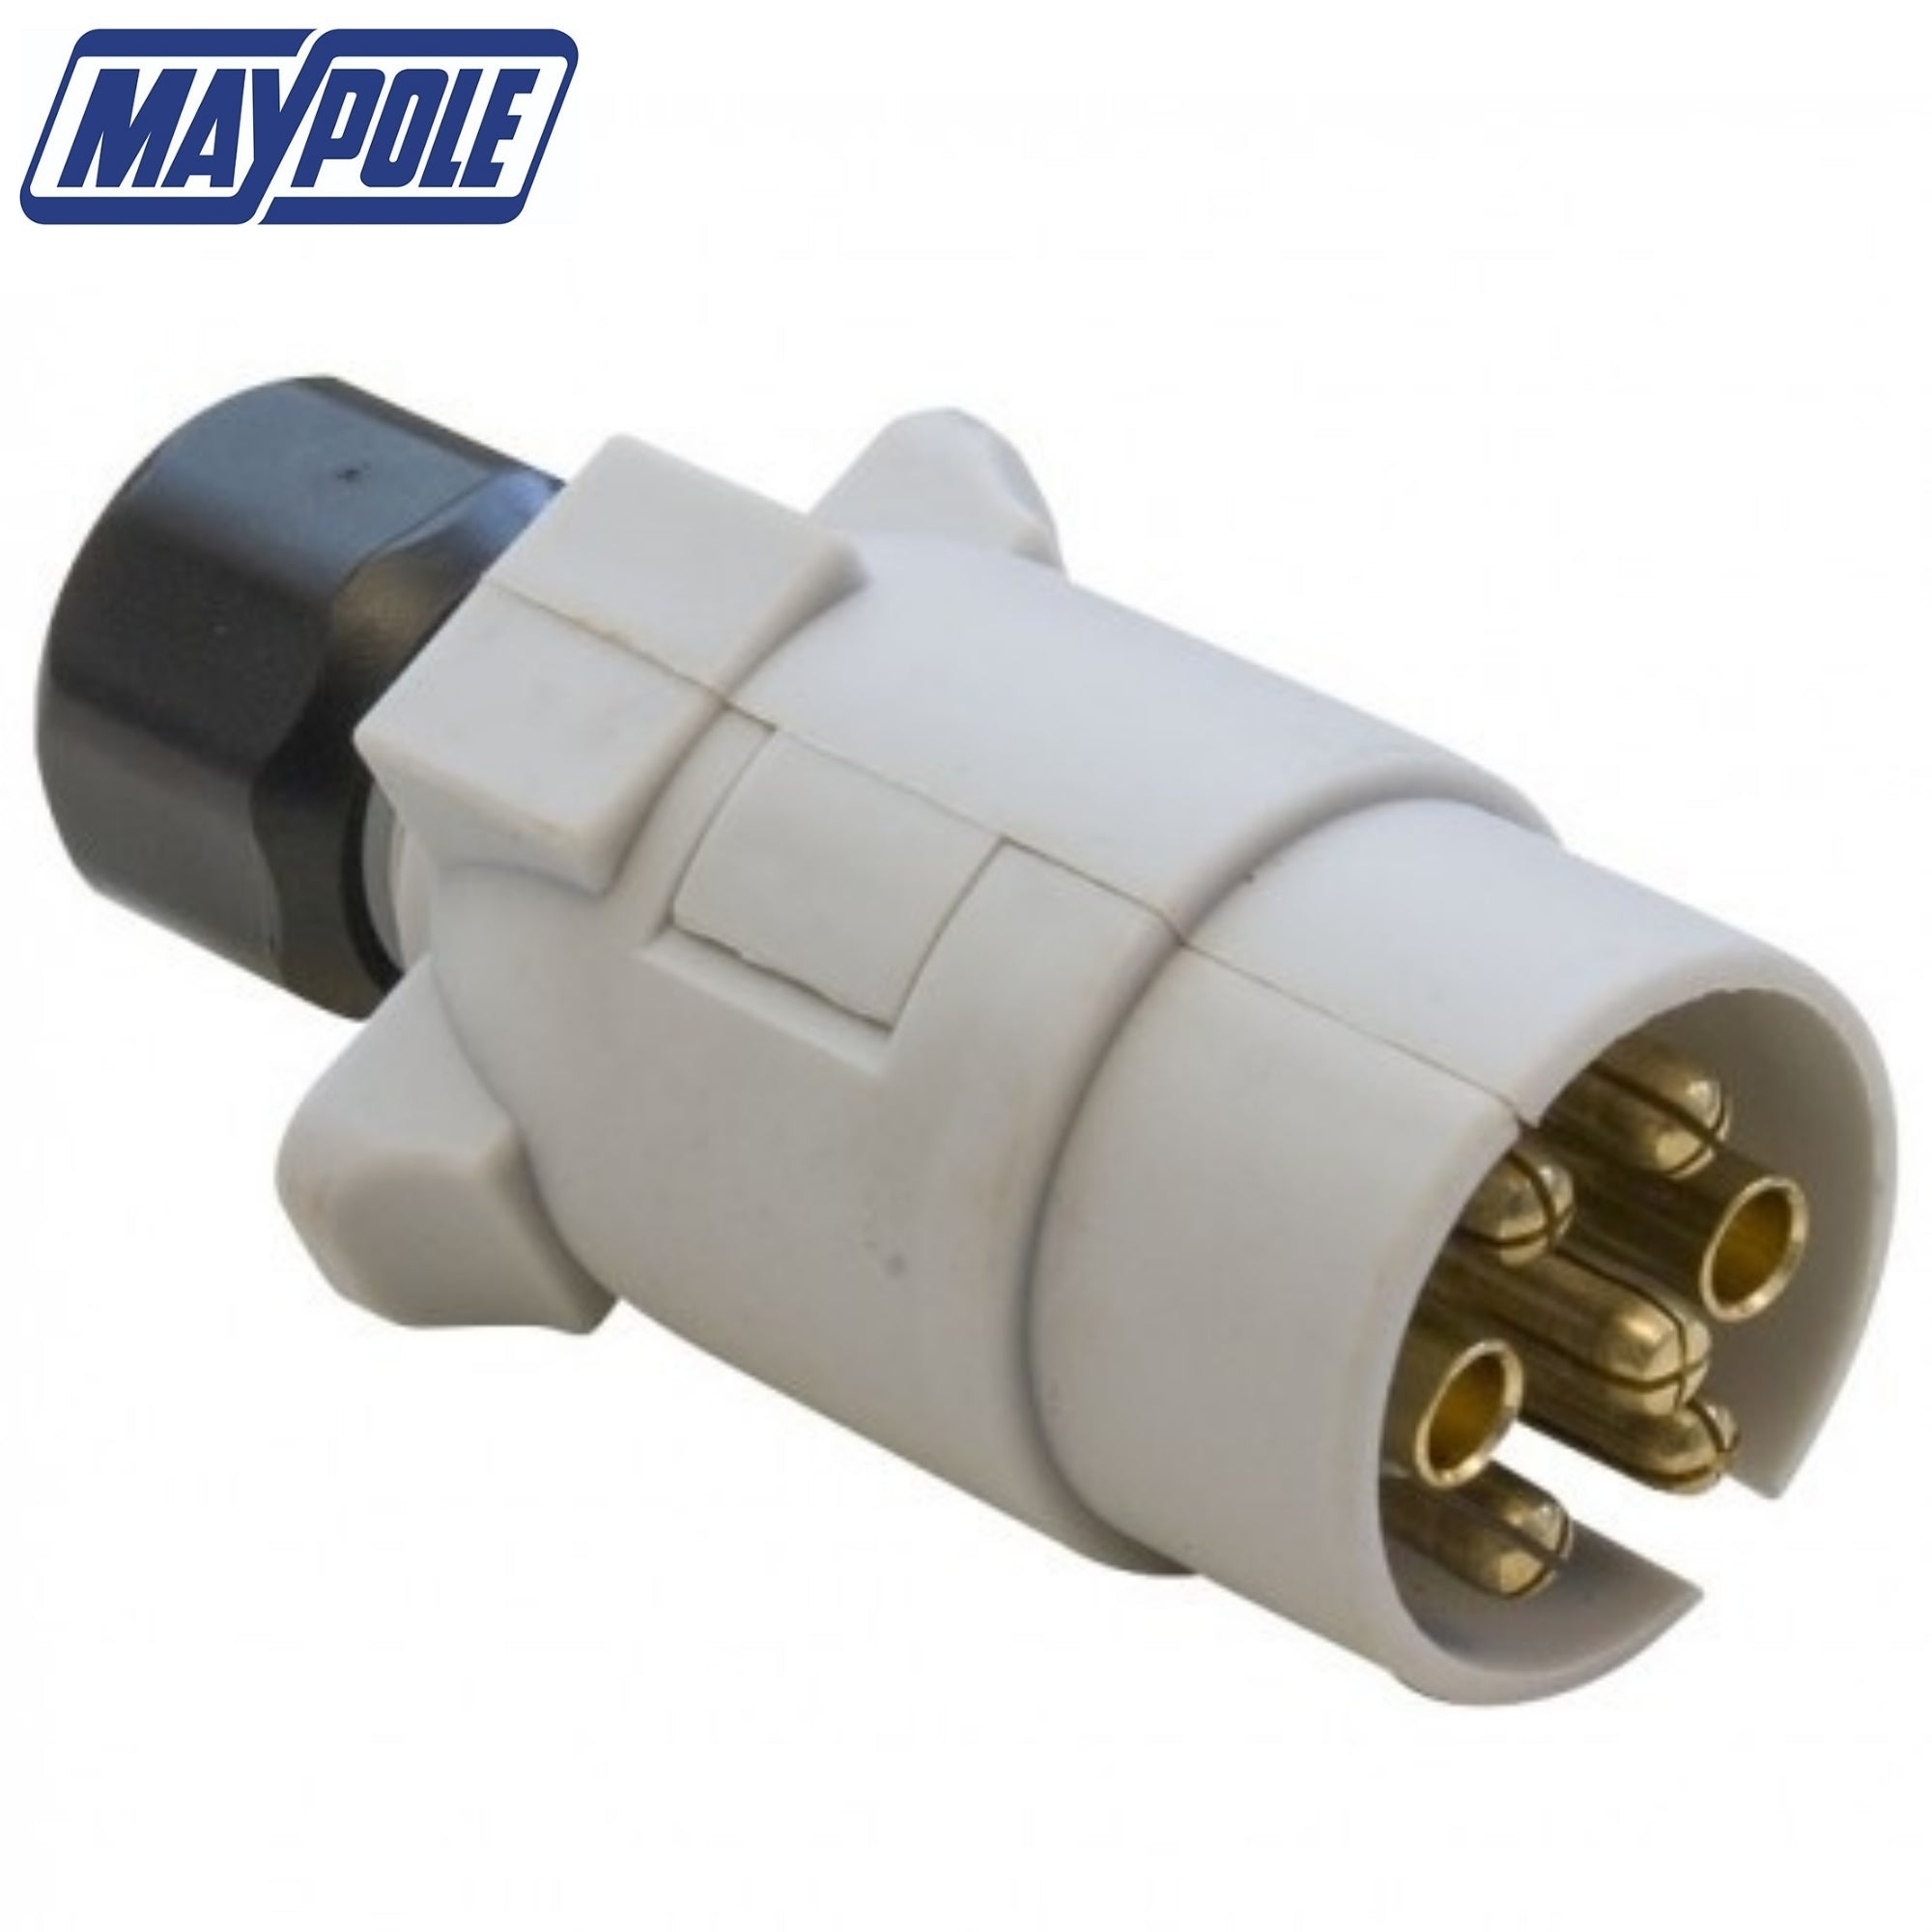 Maypole 12S 7 Pin Plug